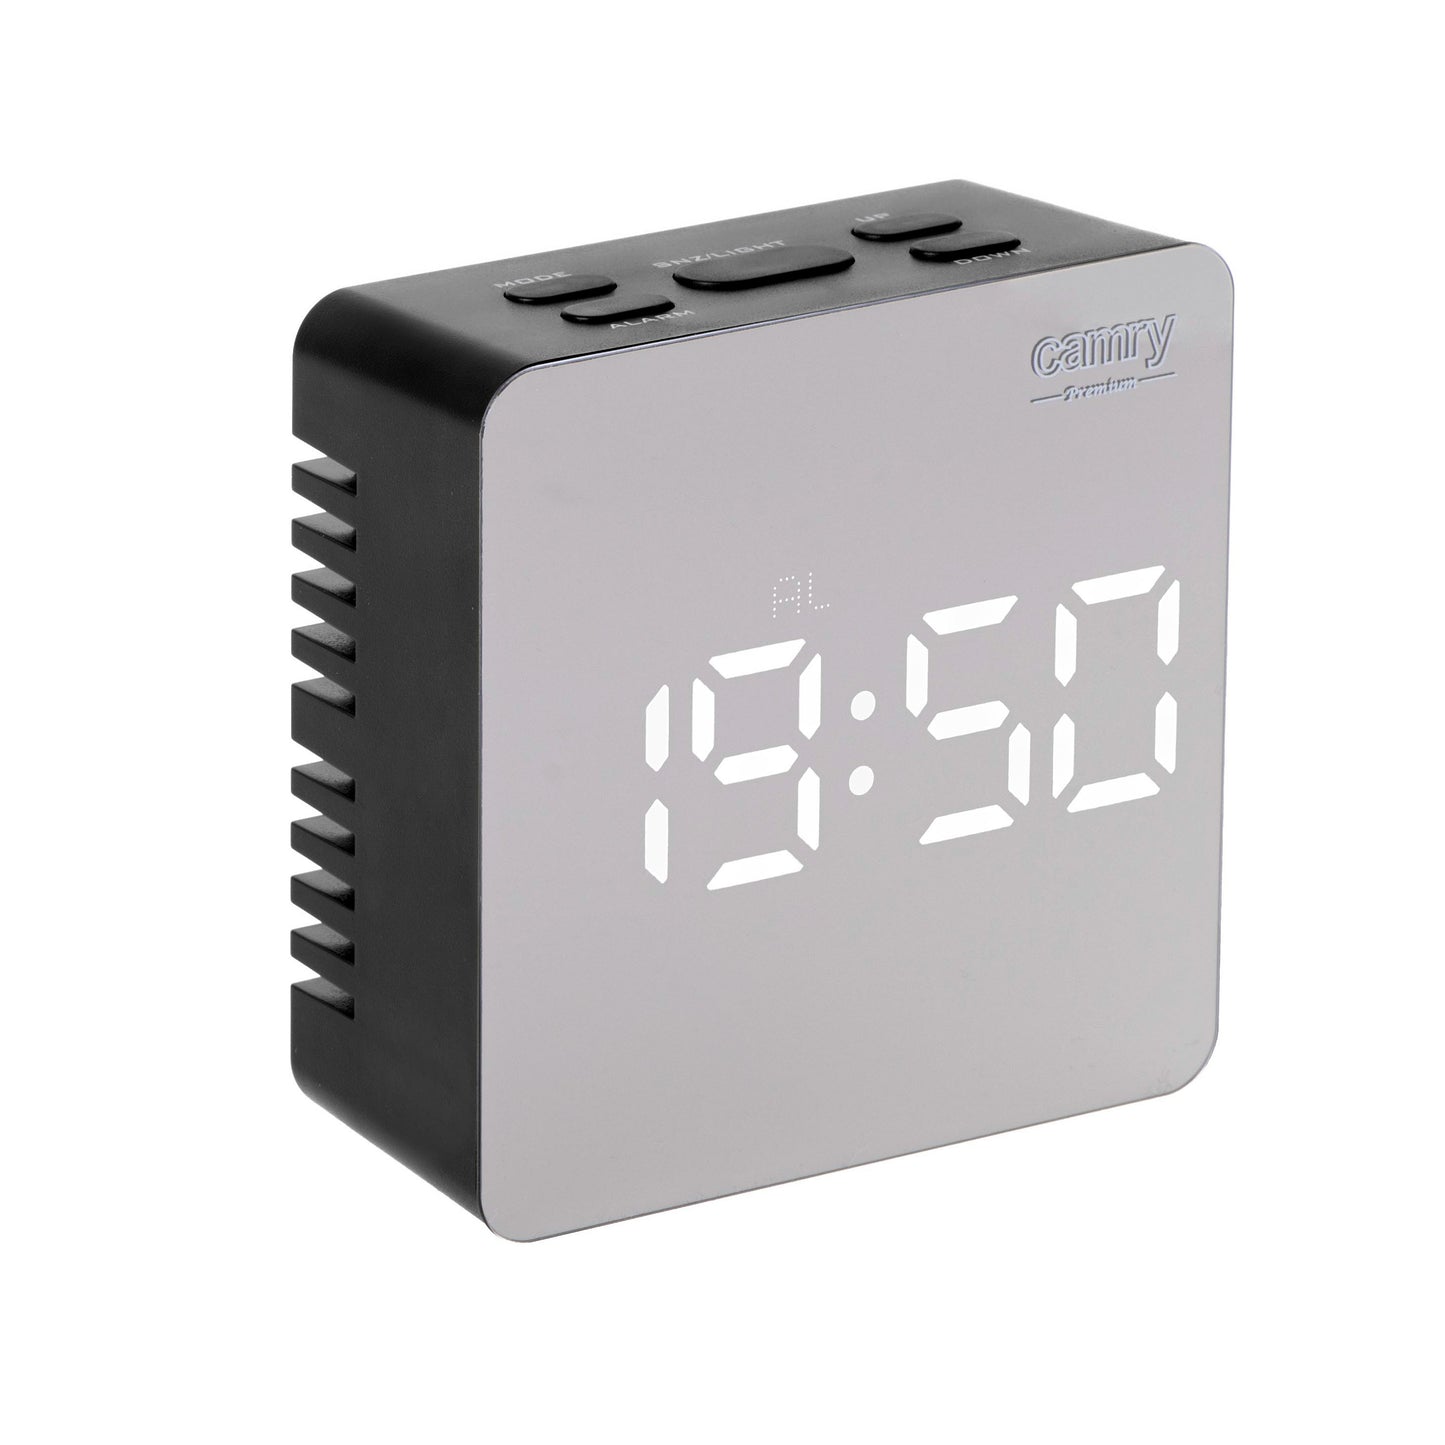 CAMRY CR_ 1150b alarm clock